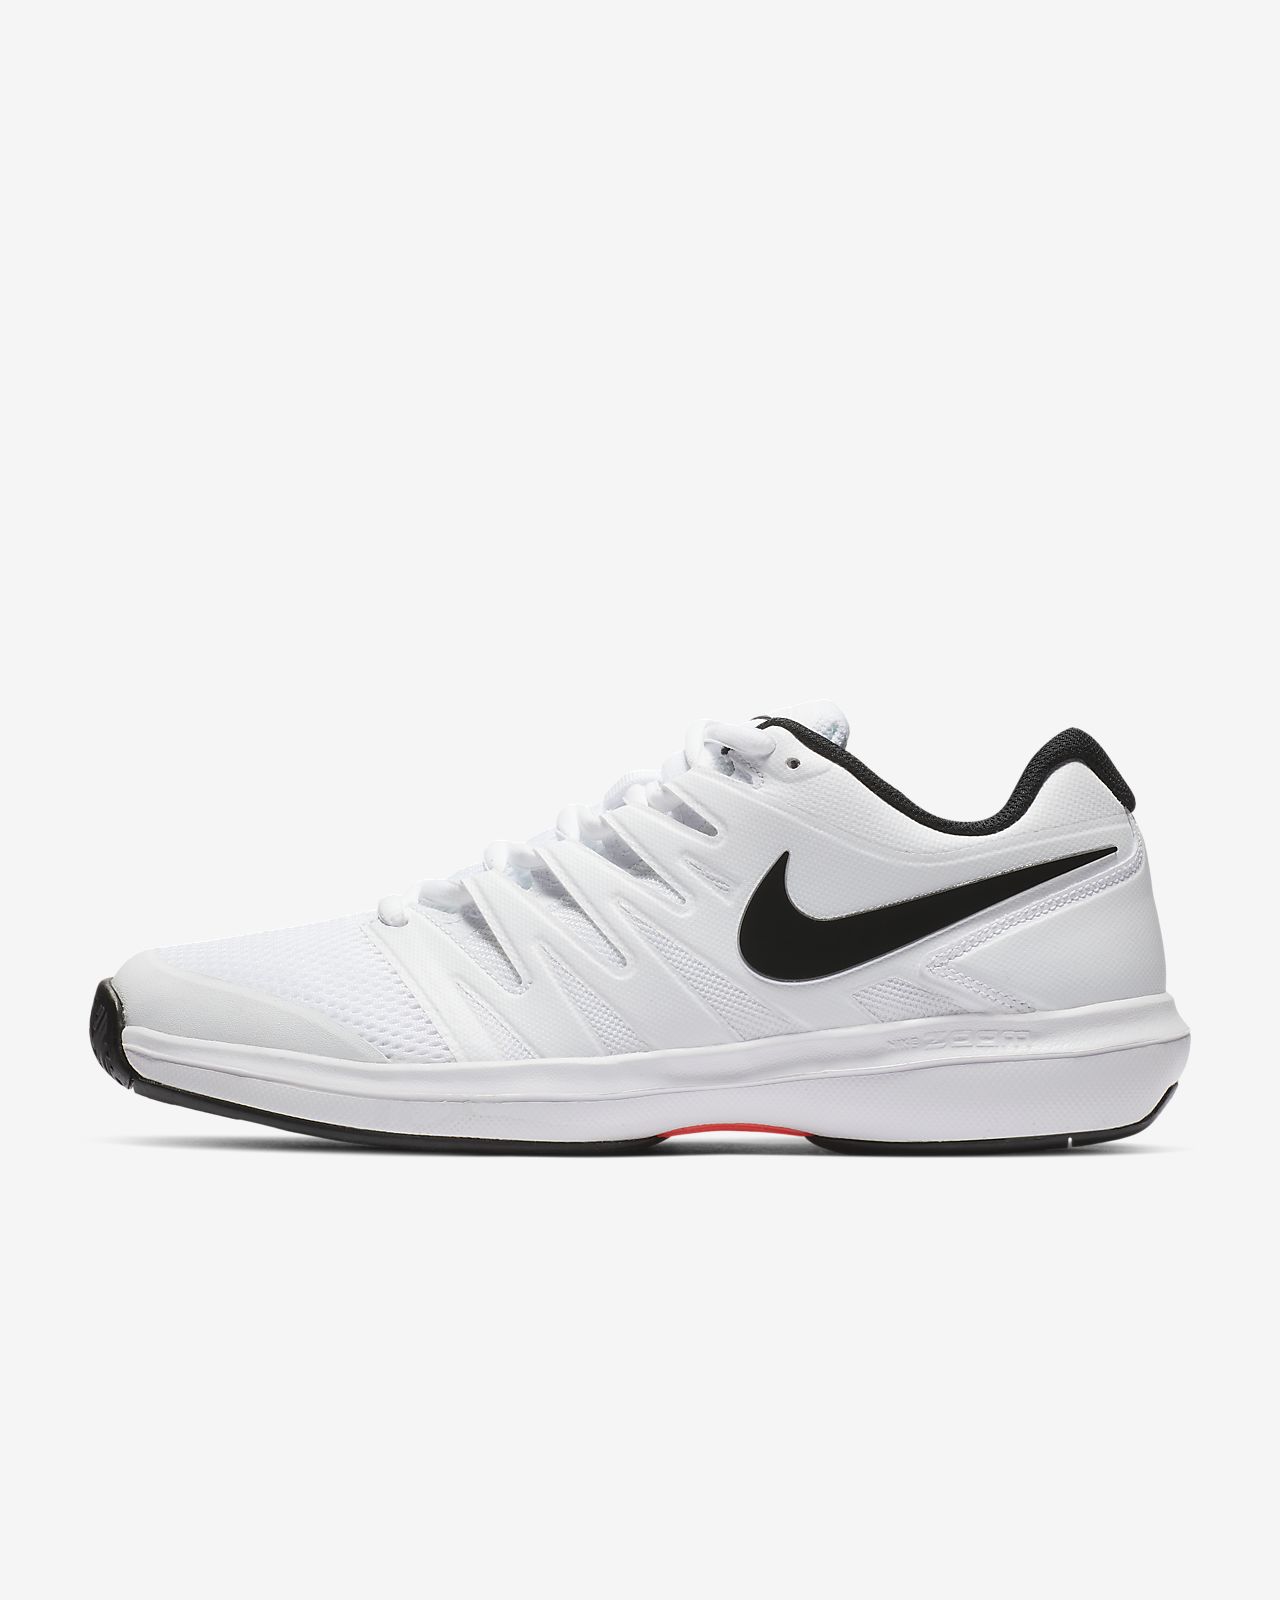 NikeCourt Air Zoom Prestige Men's Tennis Shoe. Nike HR